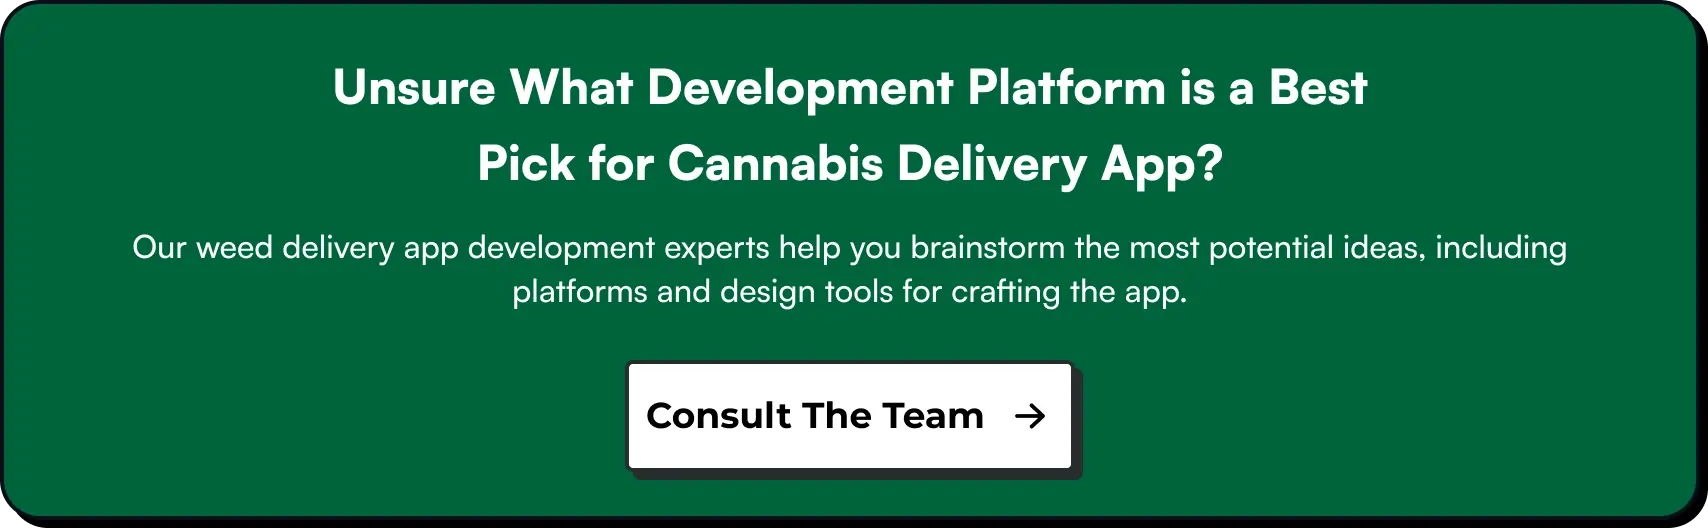 Unsure What Development Platform is a Best Pick for Cannabis Delivery App